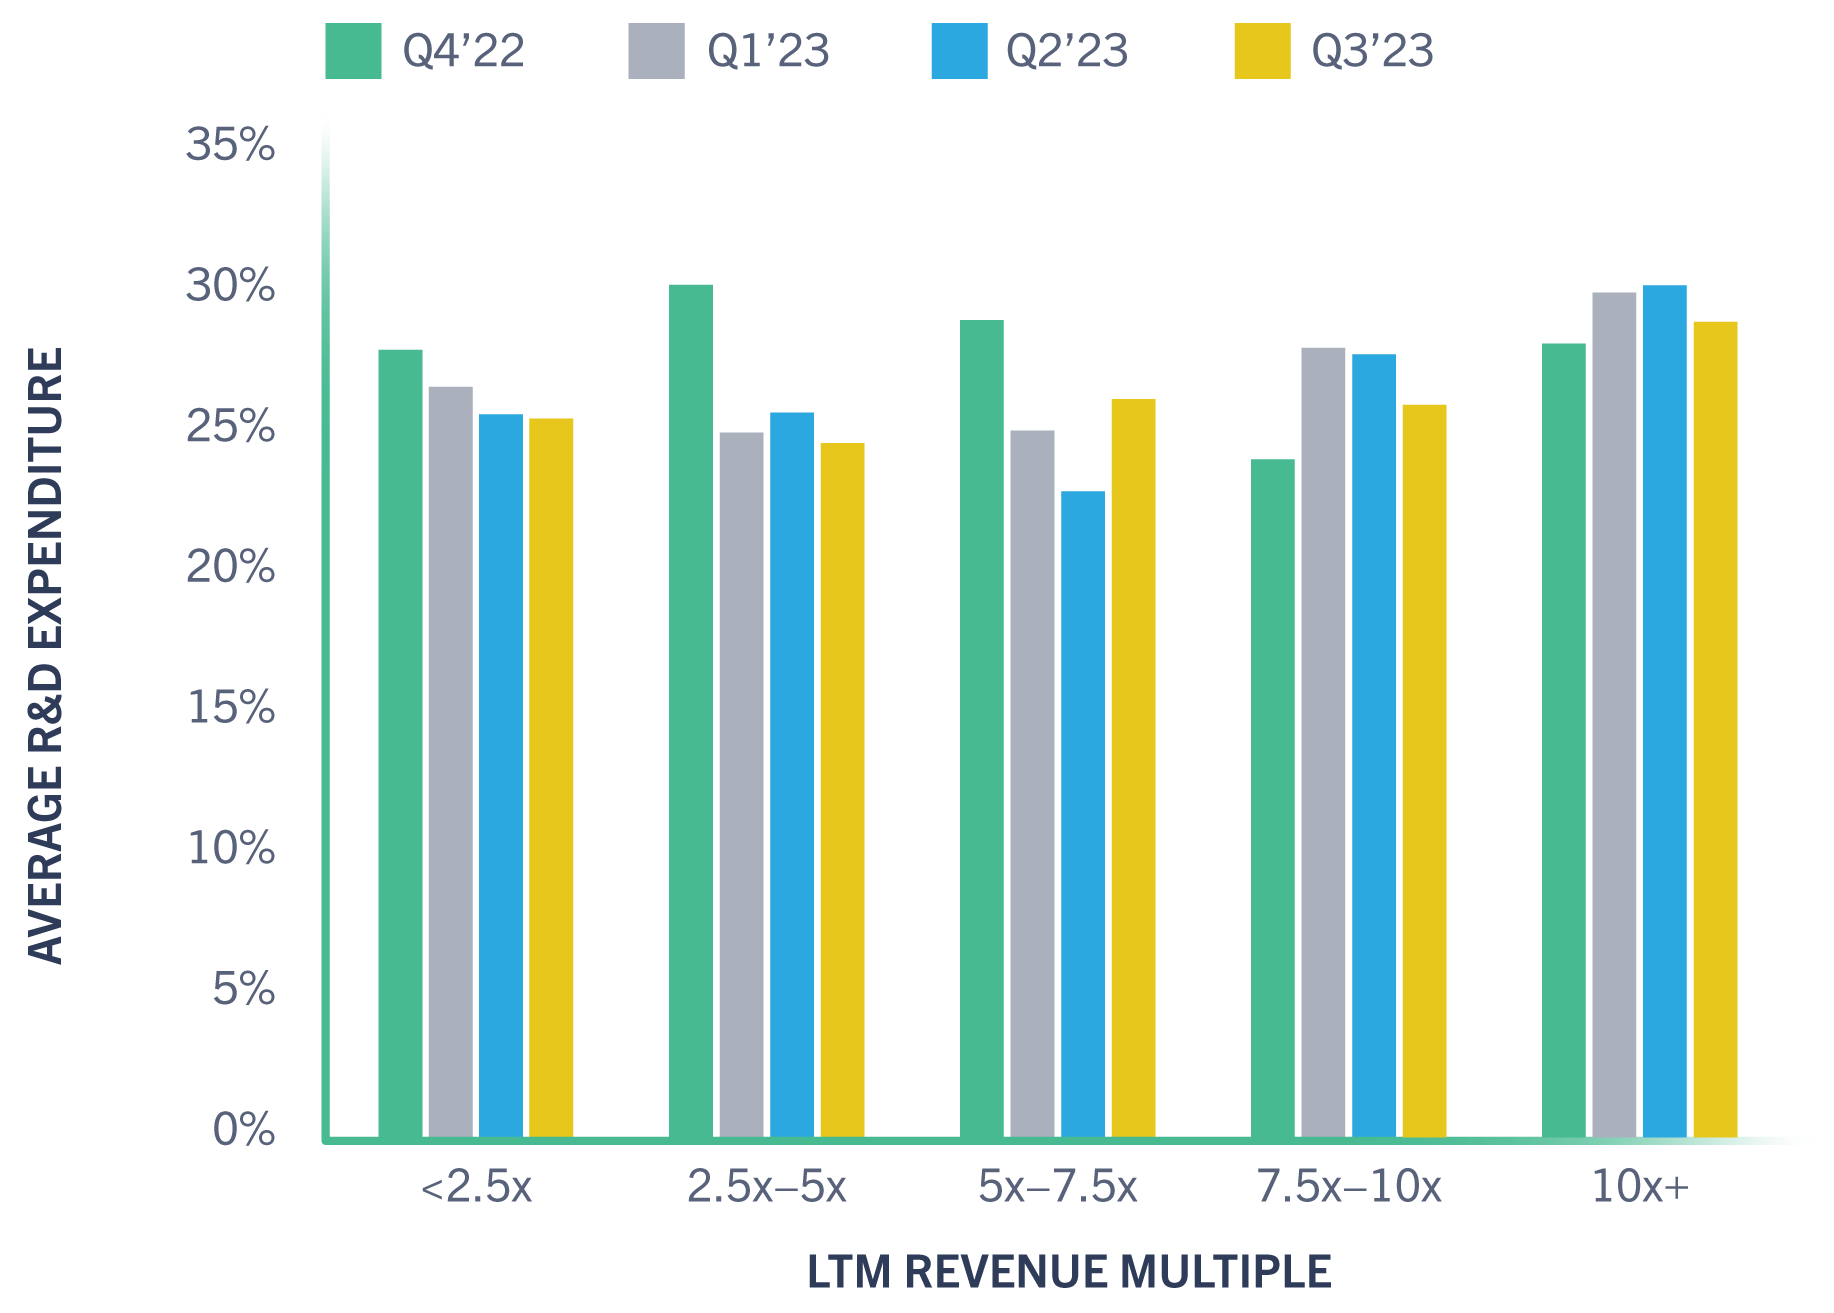 GC Public SaaS Tracker Average R&D Expenditure (%) vs. LTM Revenue Multiple